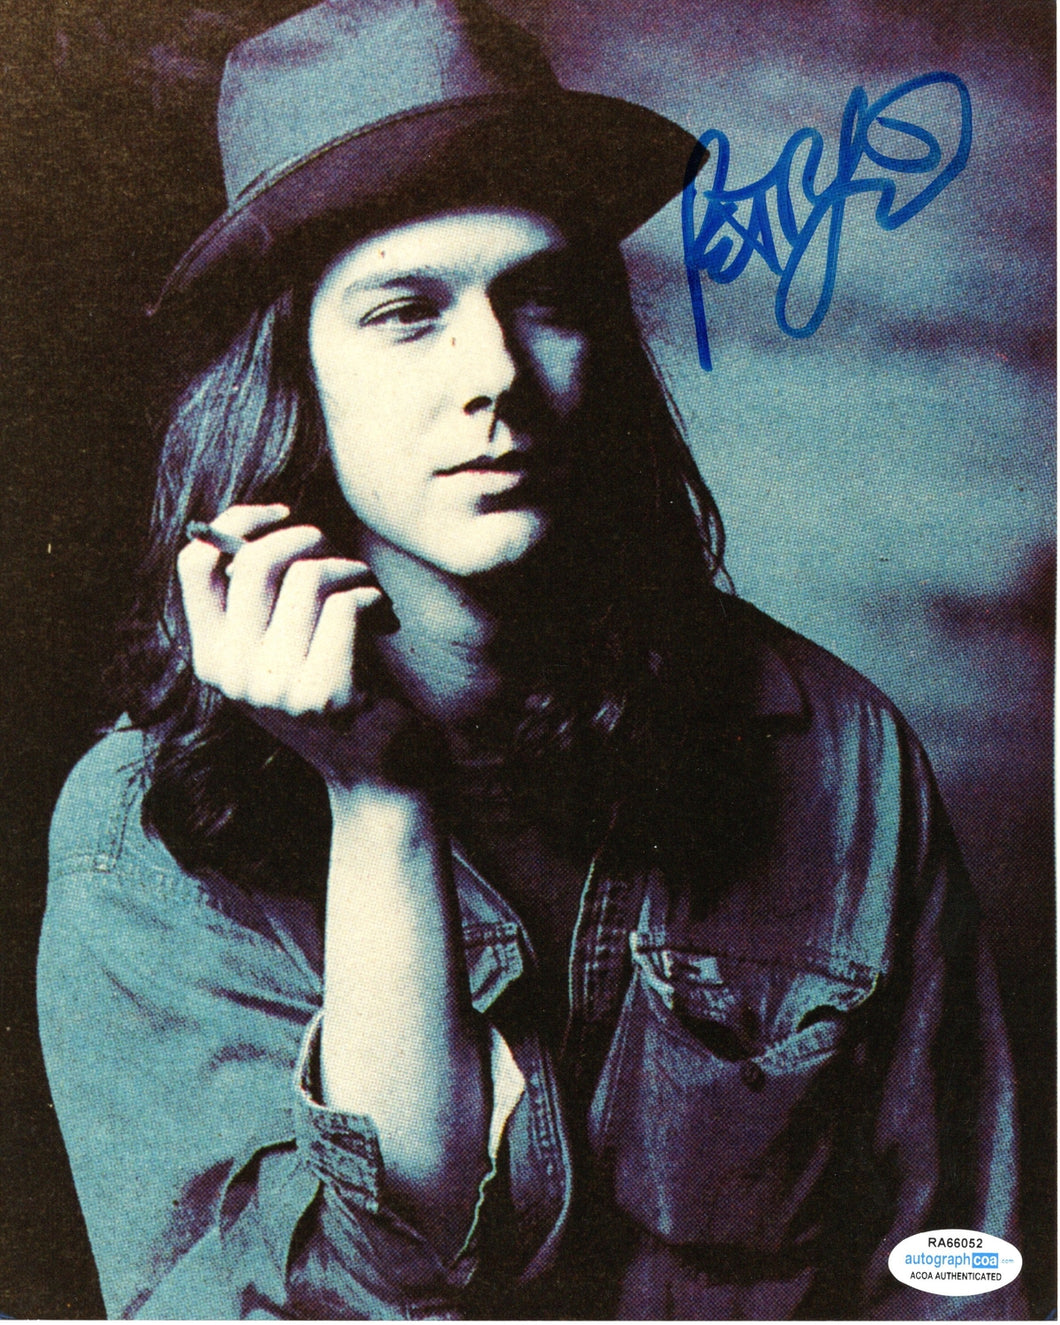 Pete Droge Autographed Signed 8x10 Photo